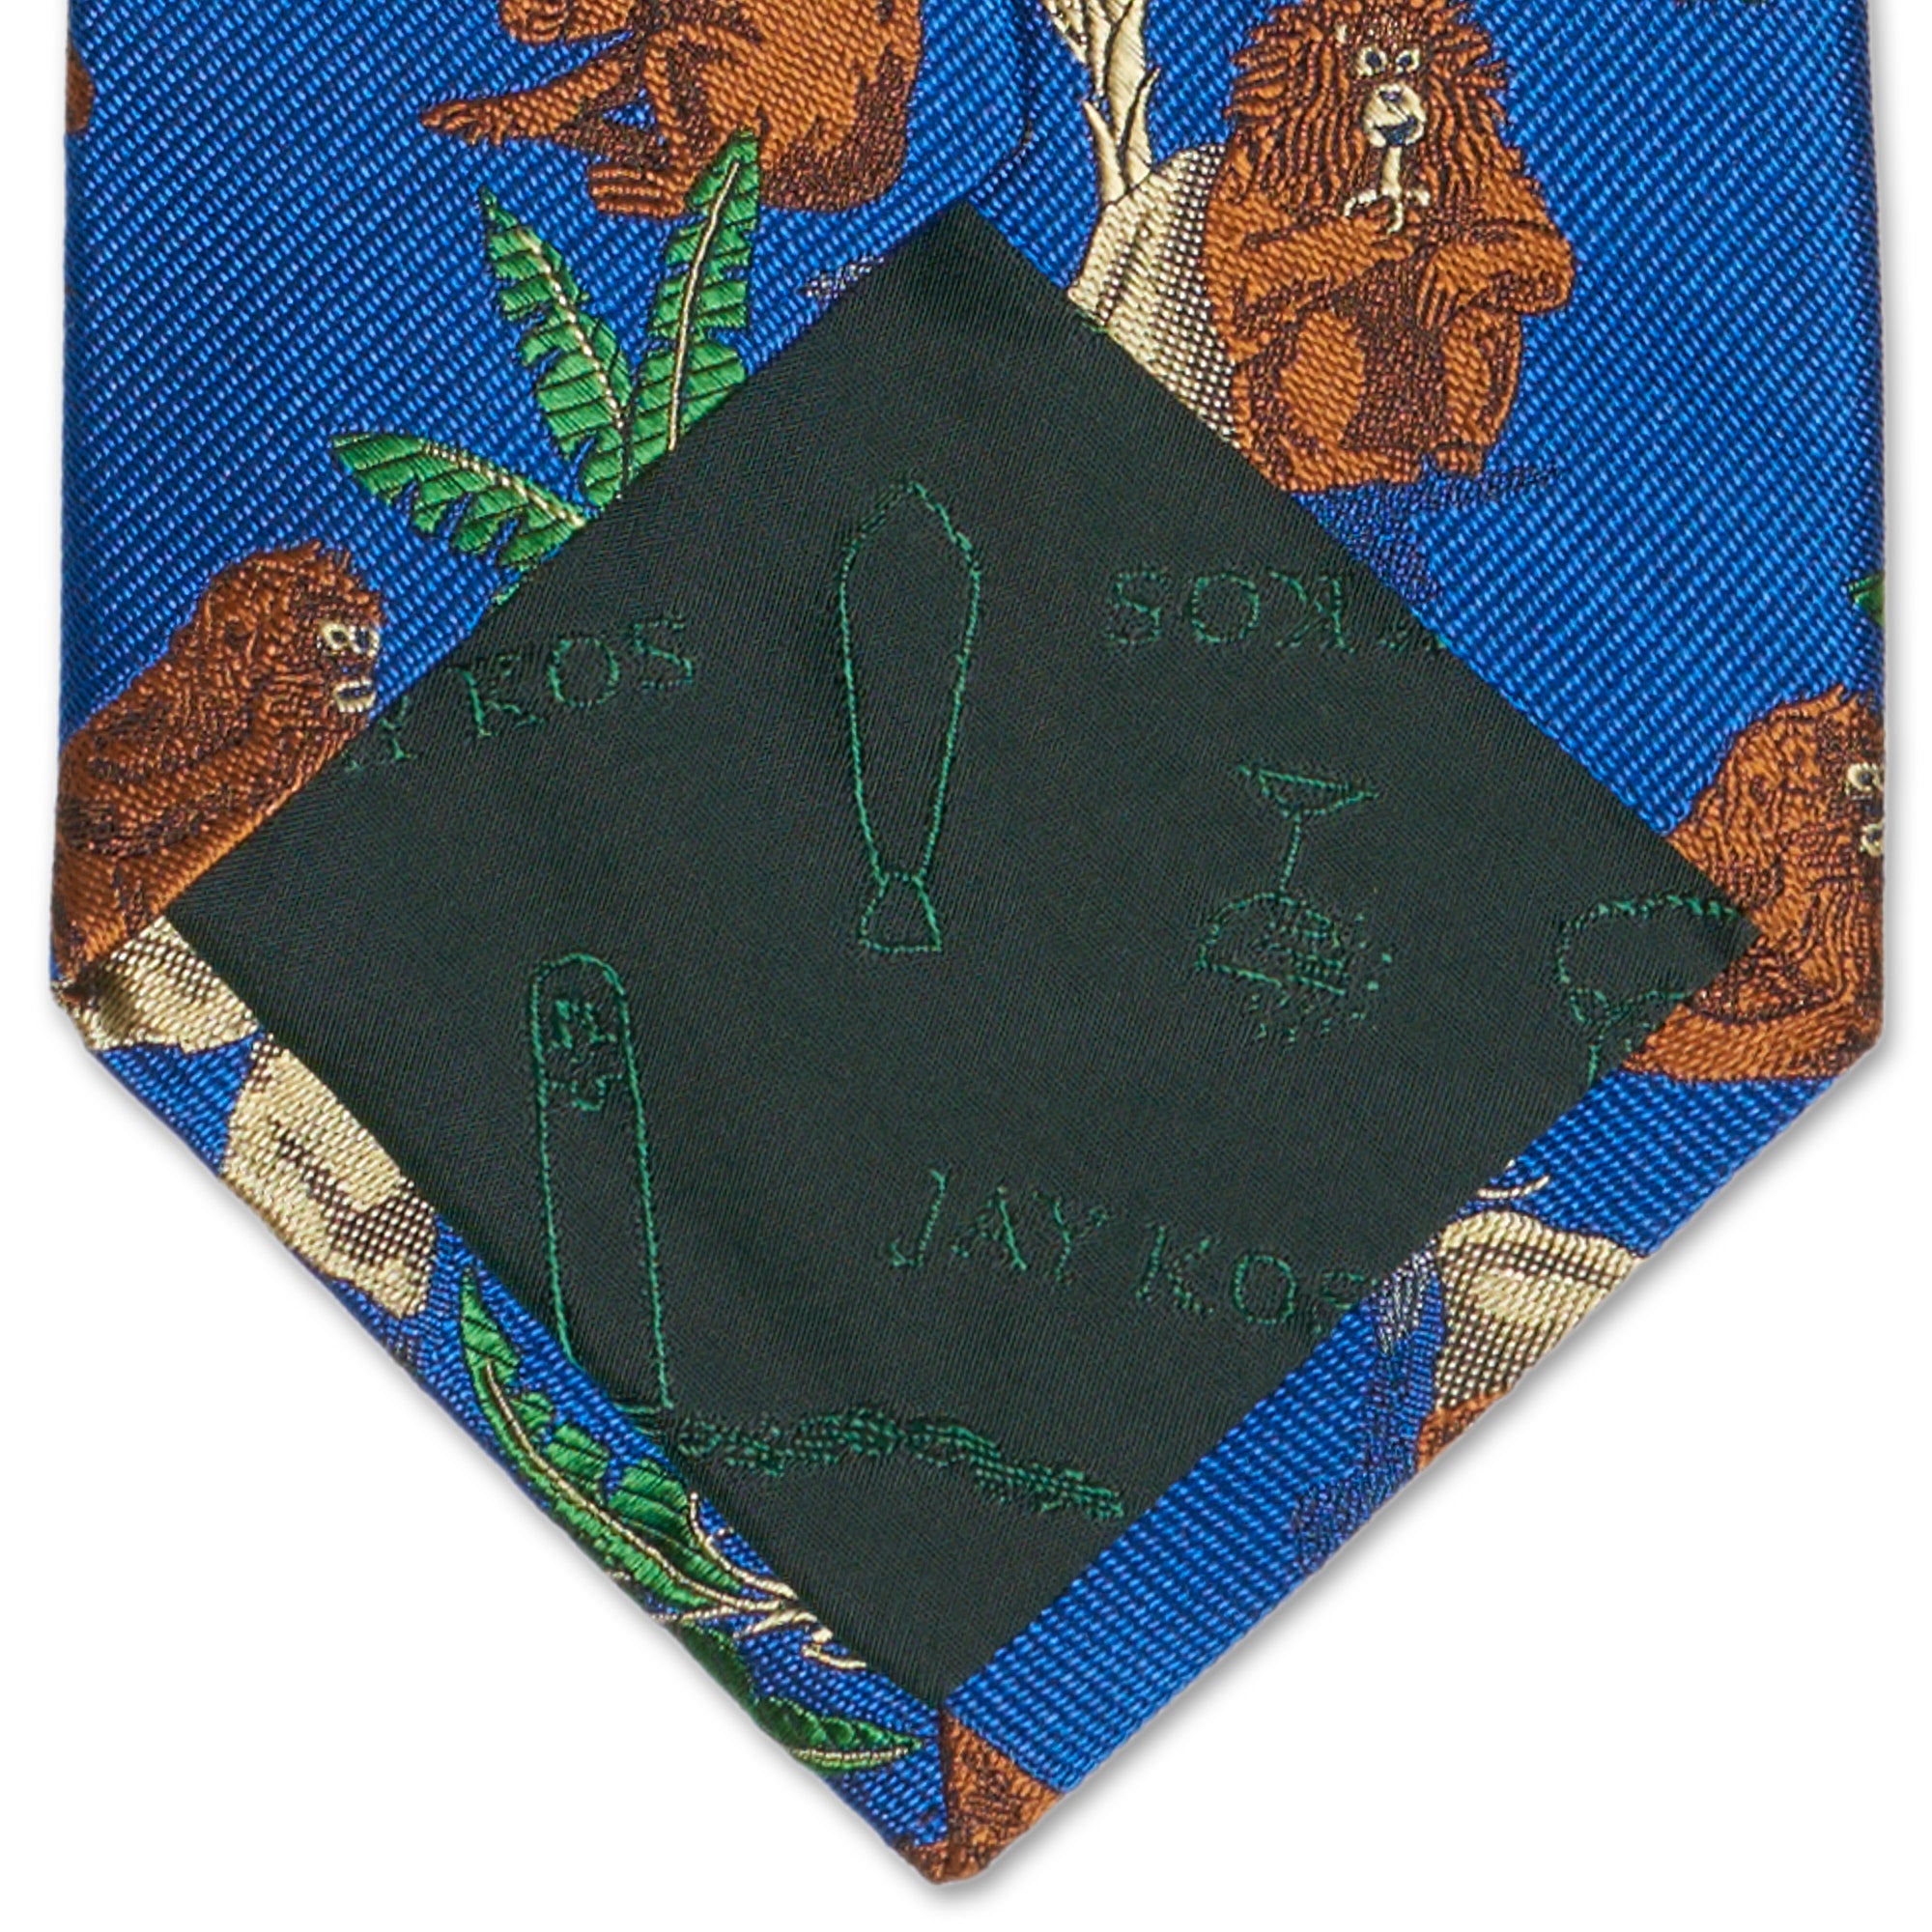 JAY KOS New York Handmade Blue Orangutan Design Silk Tie JAY KOS